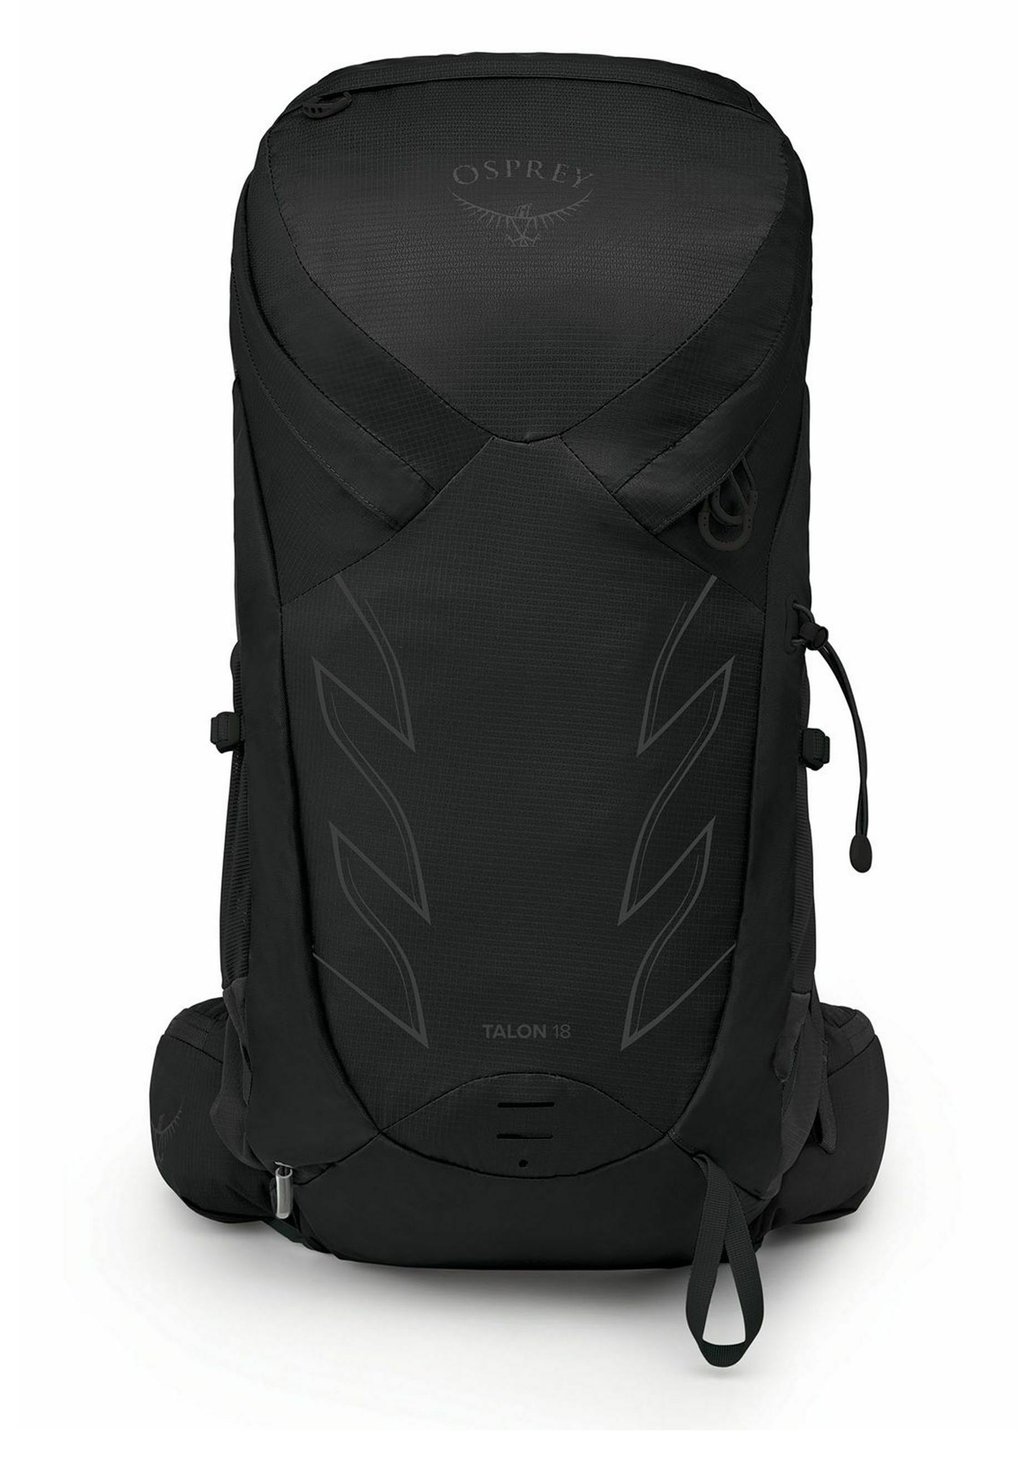 Треккинговый рюкзак Talon 18 Osprey, цвет stealth black